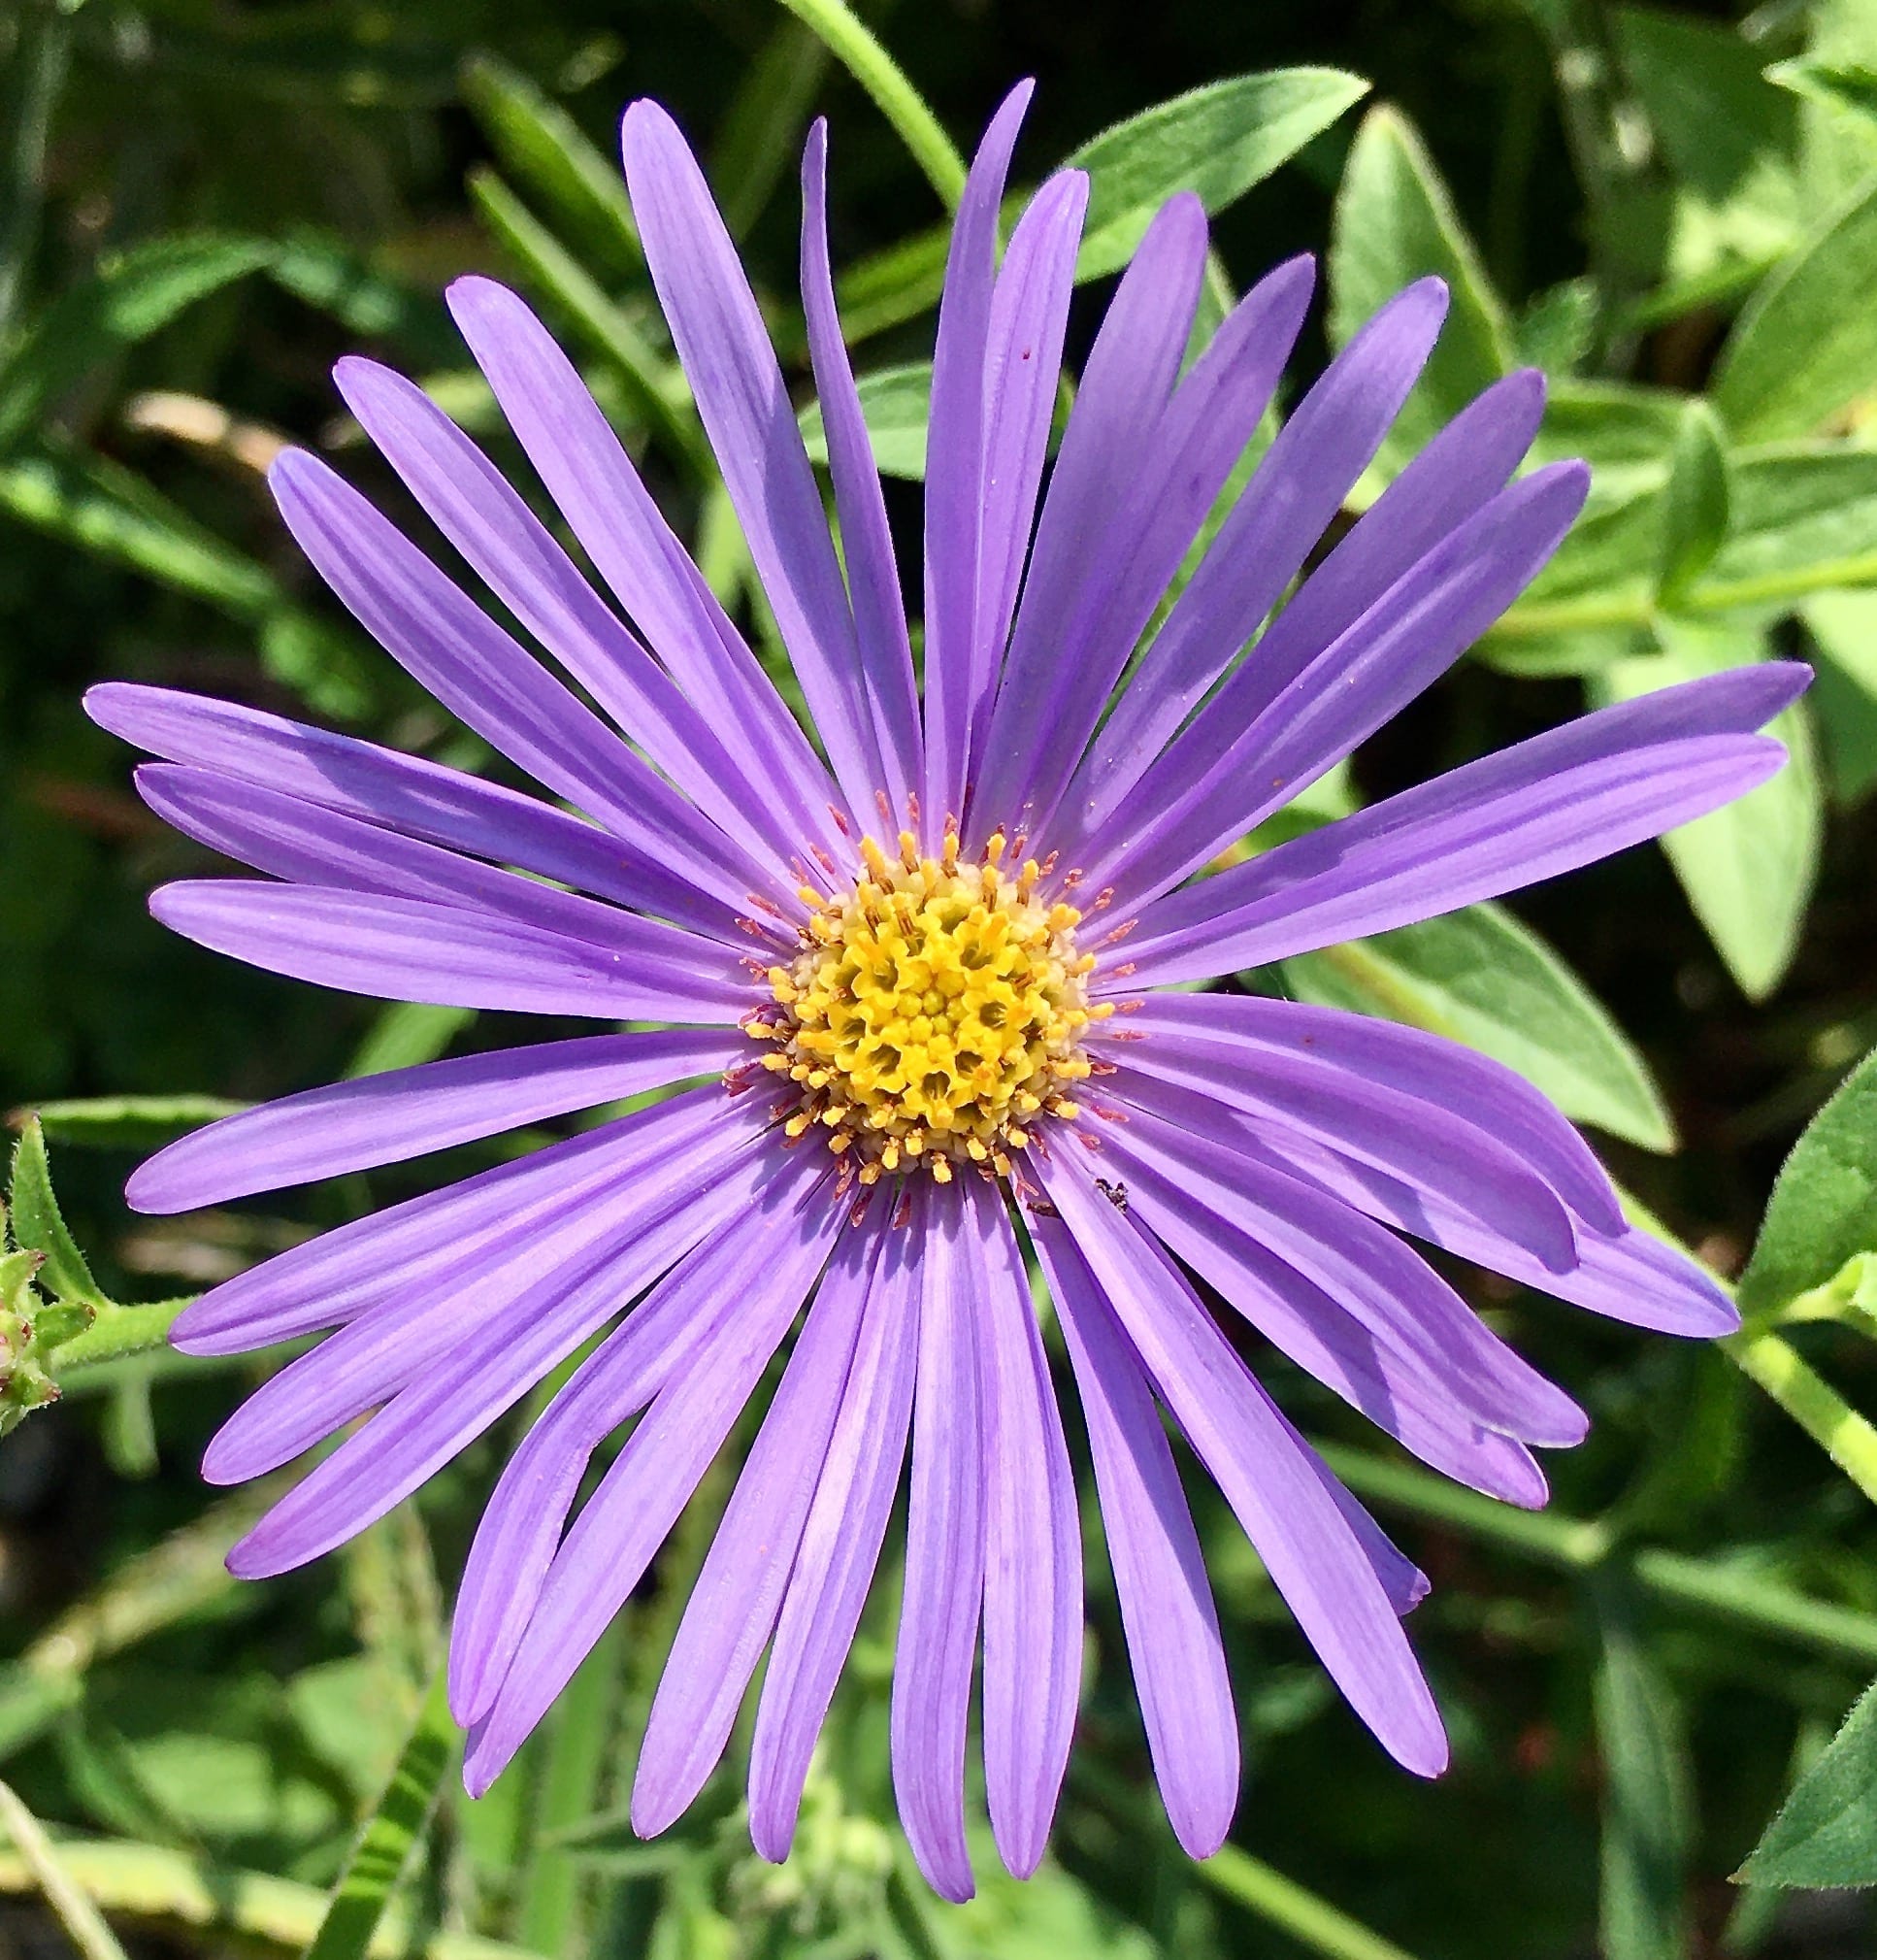 Michaelmas daisy flower